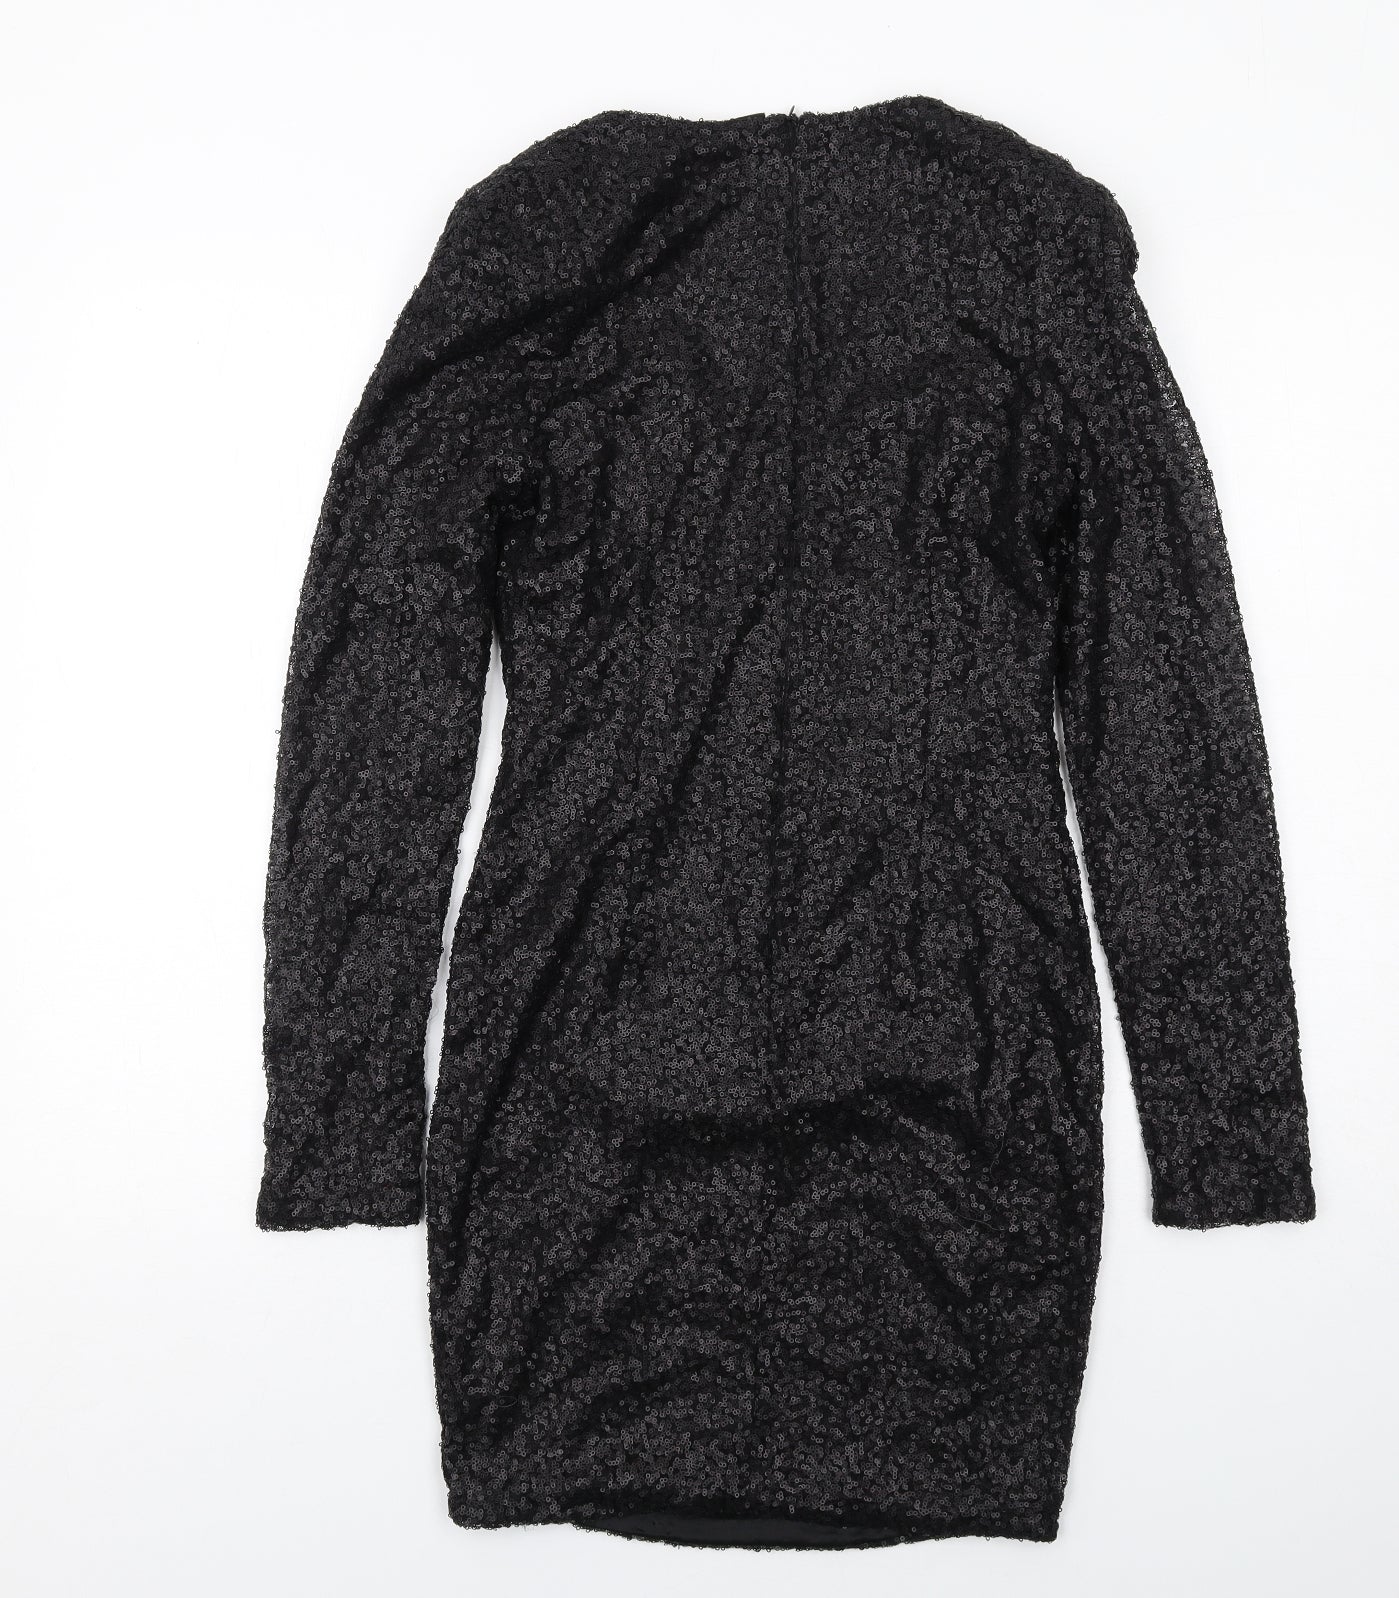 AX Paris Womens Black Polyester Bodycon Size 10 V-Neck Zip